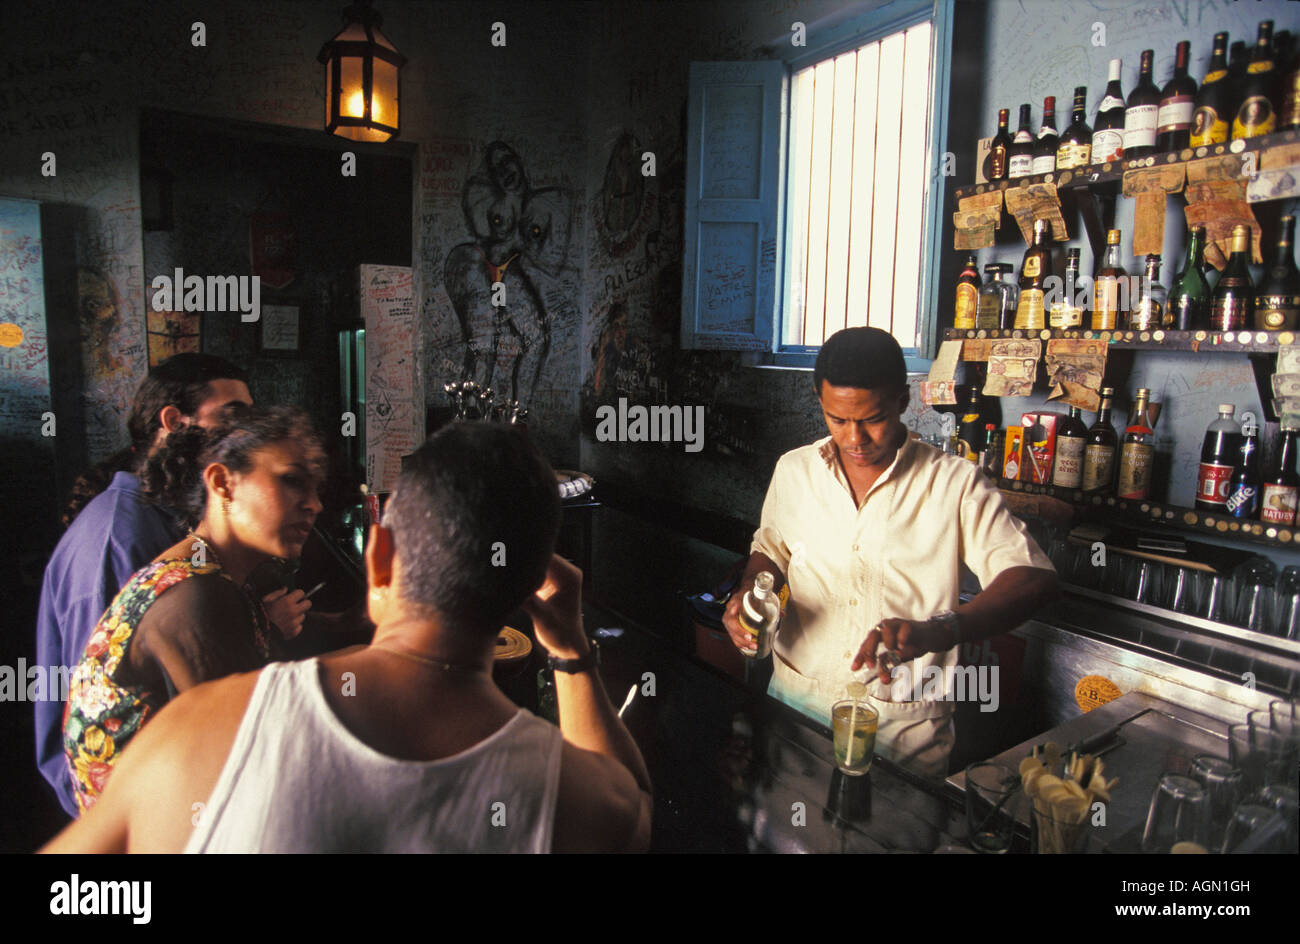 Cuba Havana People sitting at pub Stock Photo - Alamy